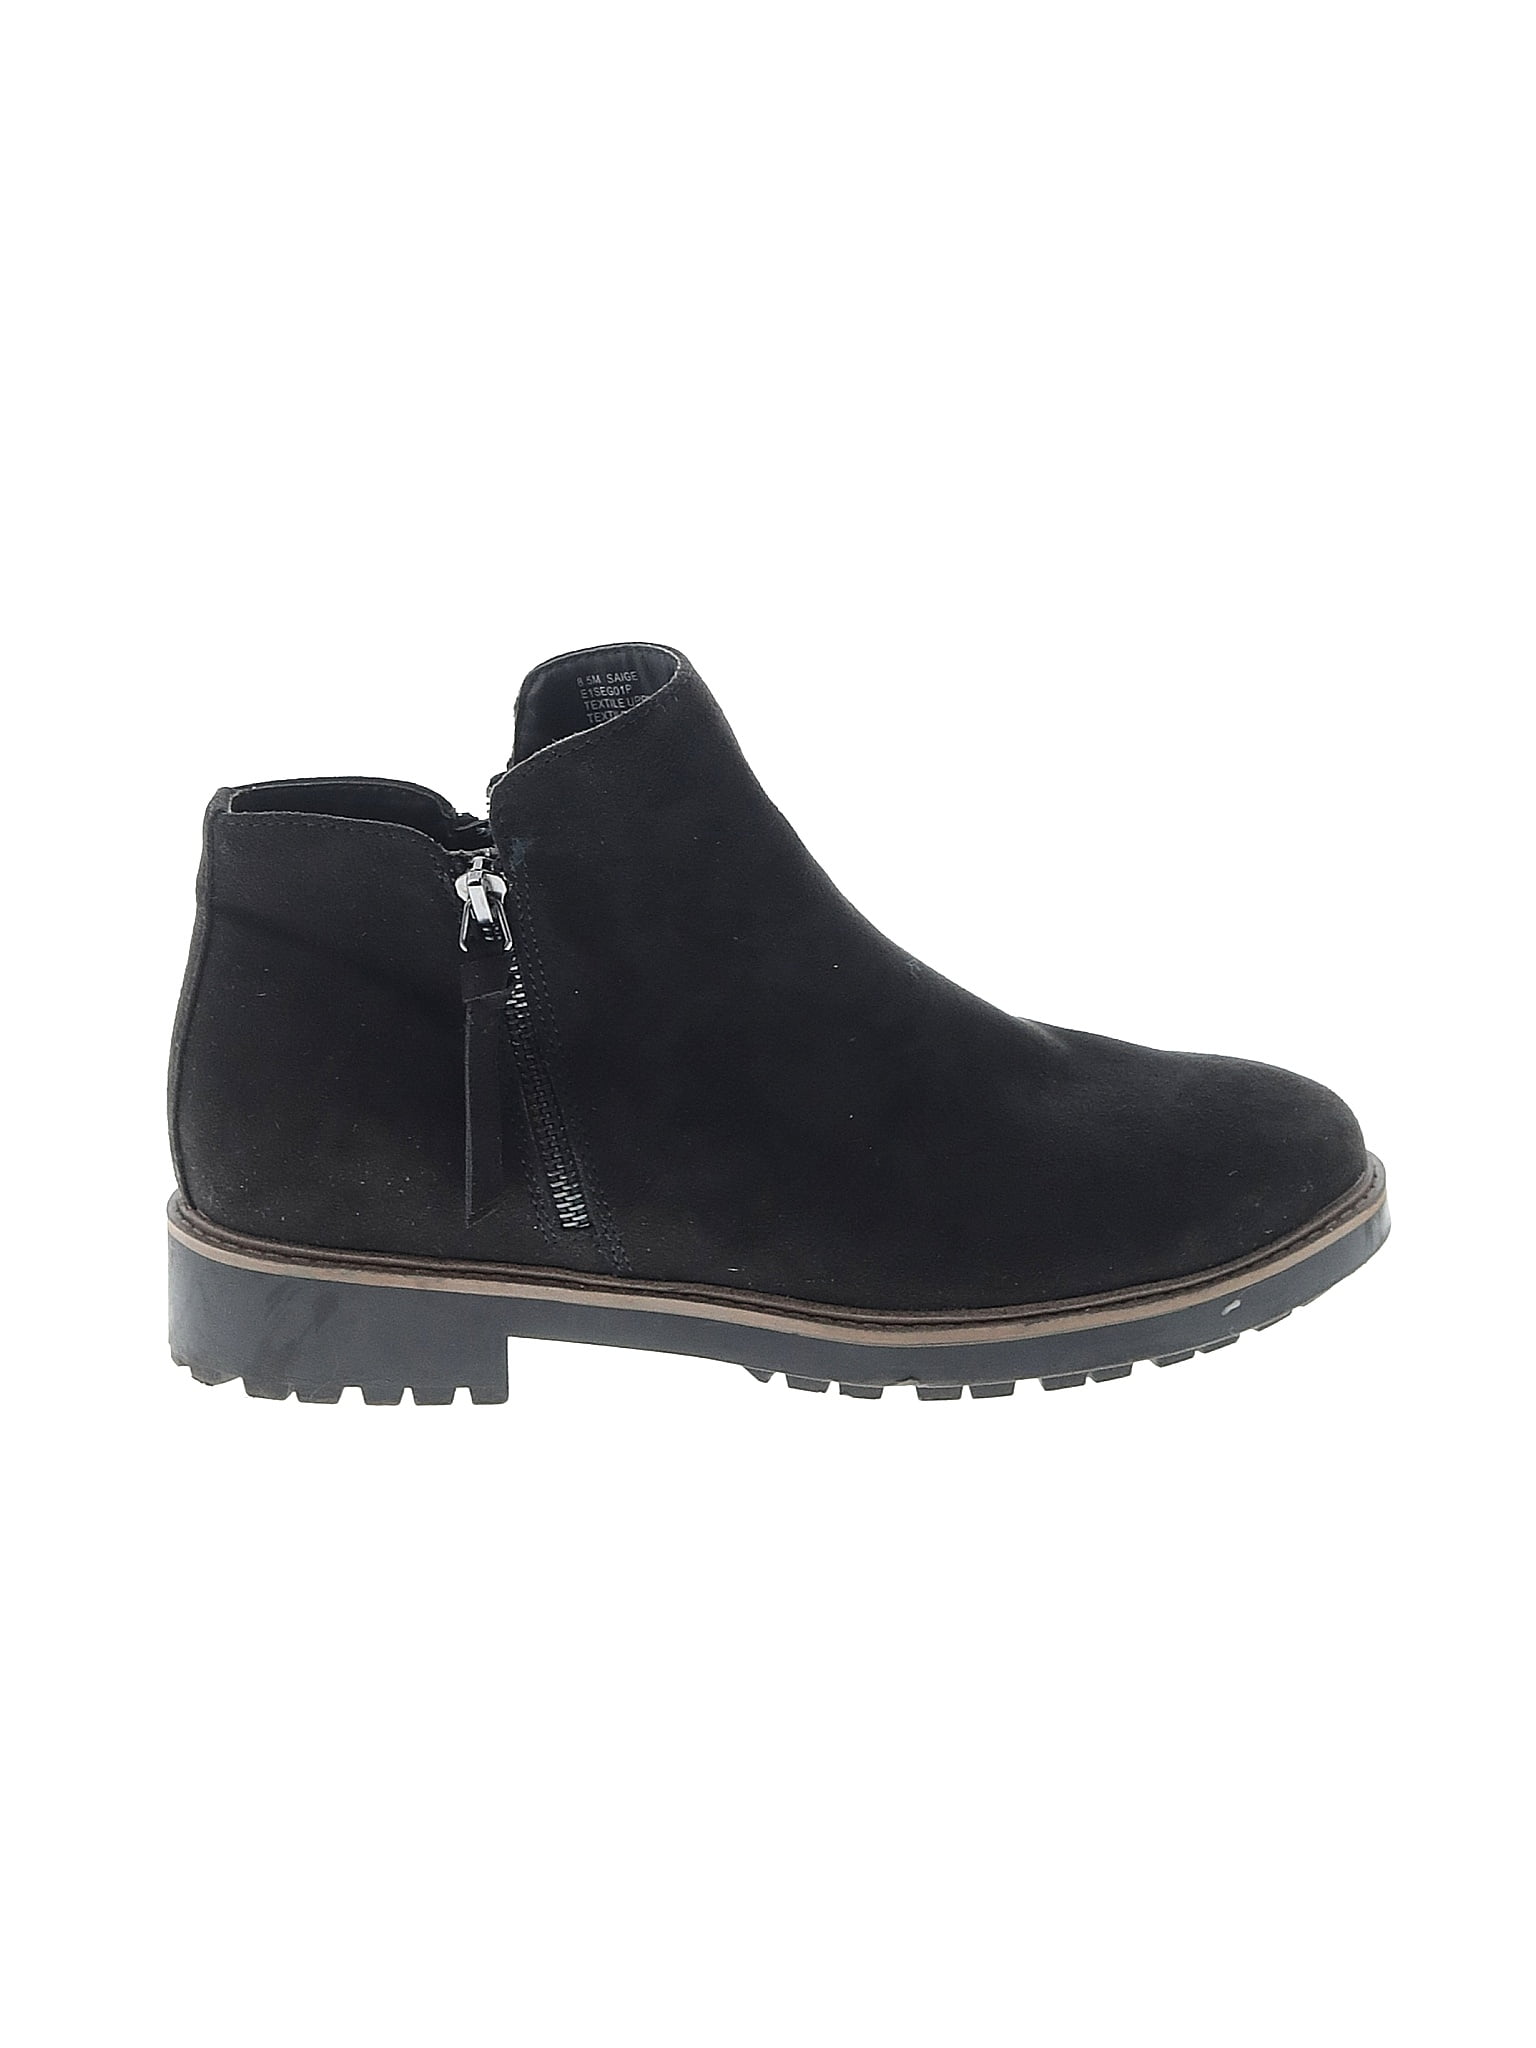 Esprit Solid Black Ankle Boots Size 8 1/2 - 54% off | thredUP